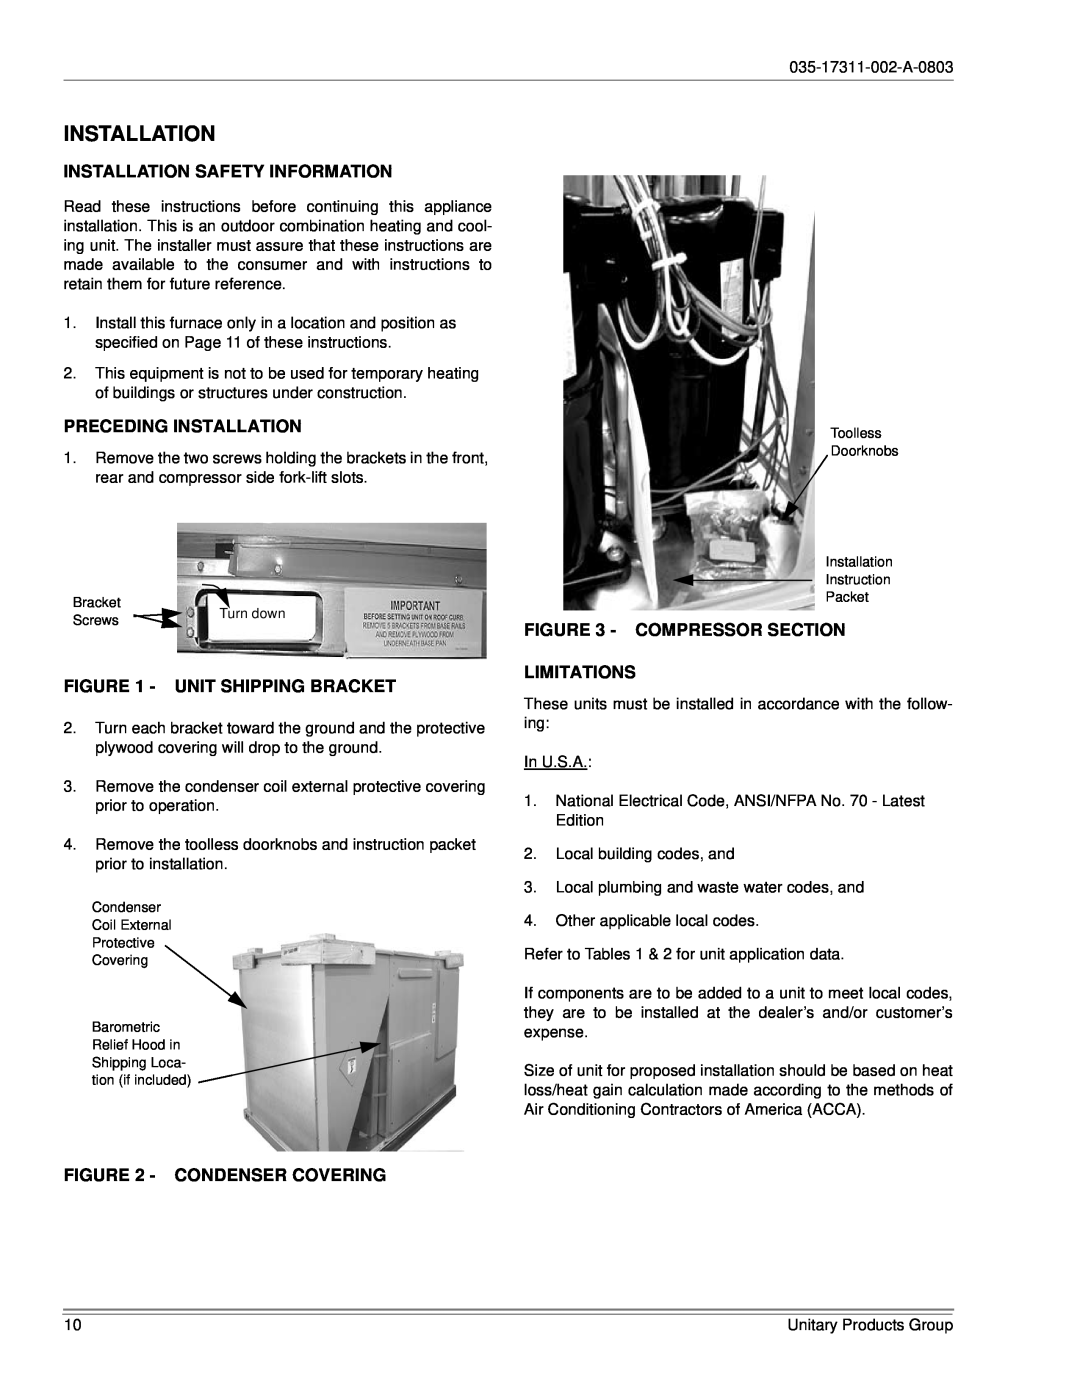 York 150, 120 Installation Safety Information, Preceding Installation, Unit Shipping Bracket, Condenser Covering 